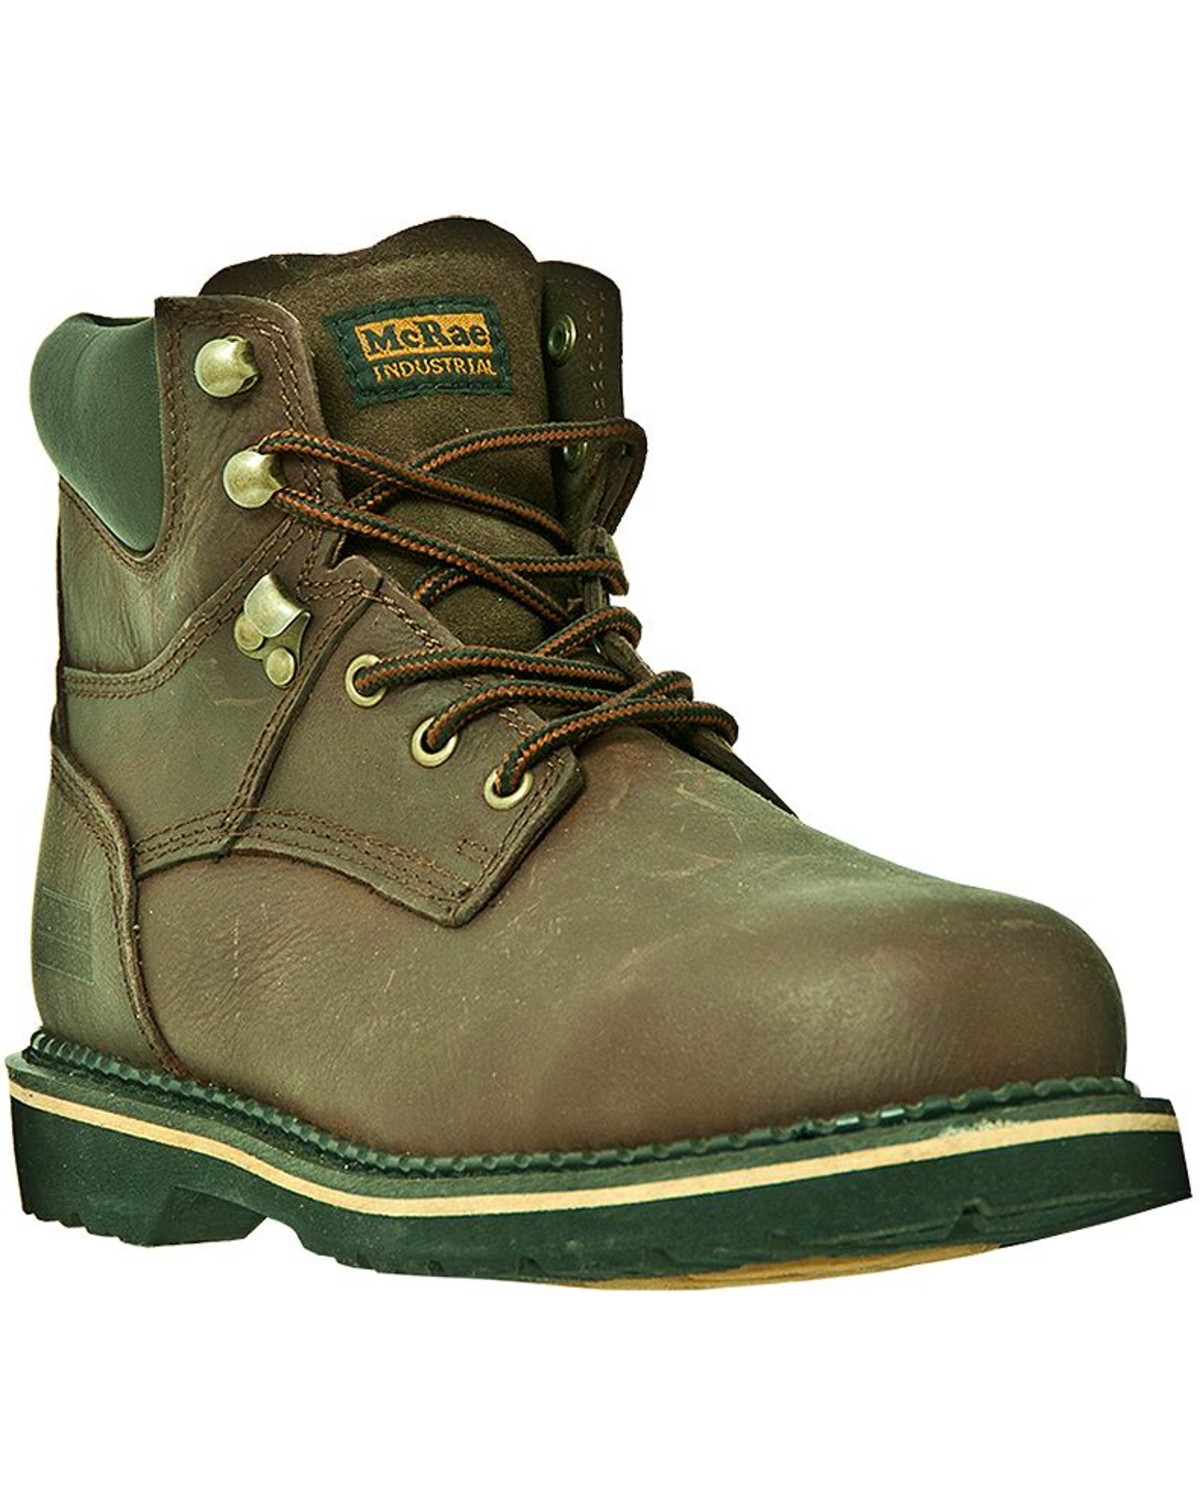 mcrae industrial boots